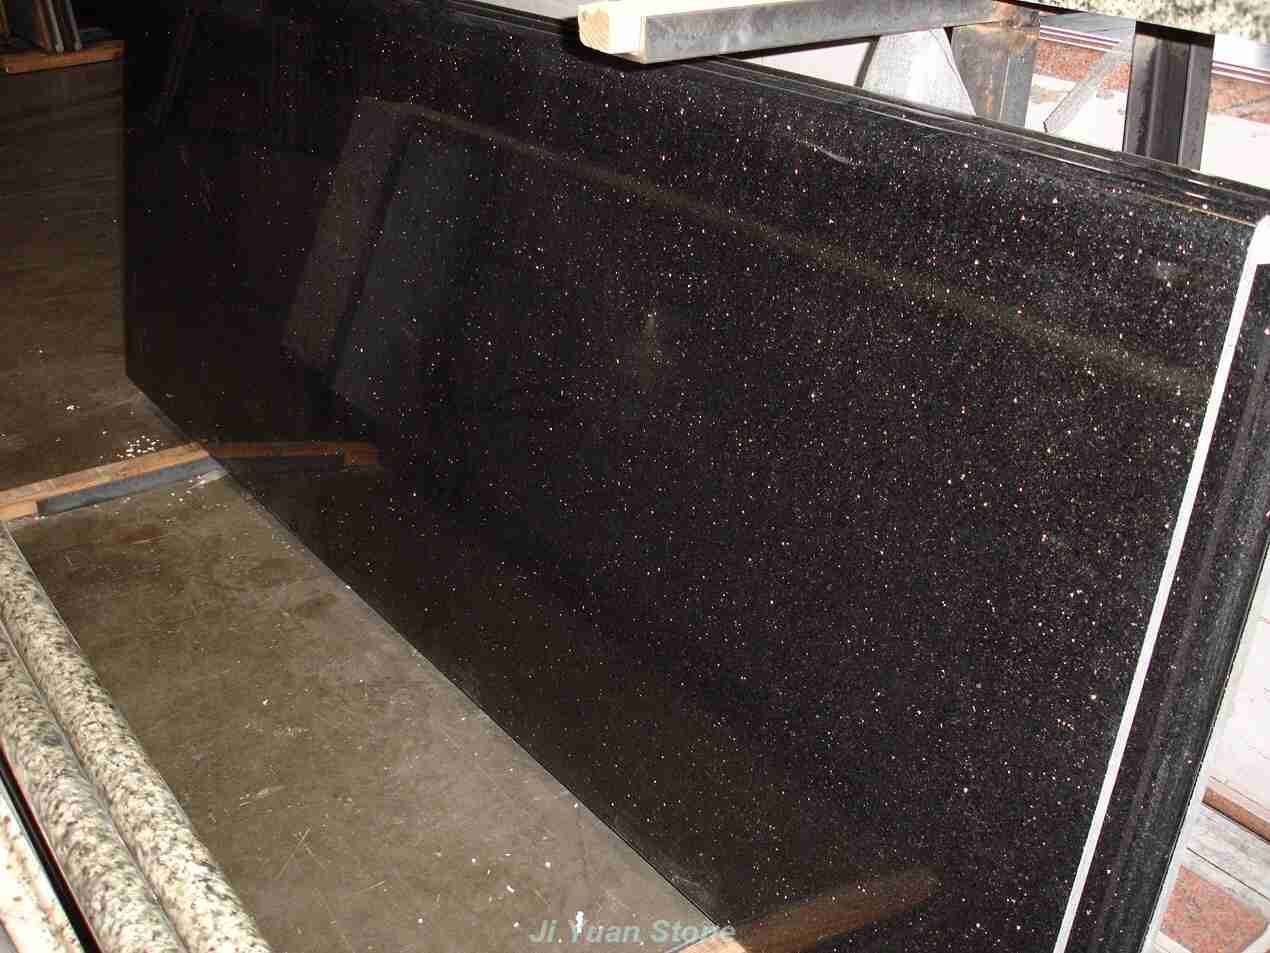 Black galaxy granite countertop price,black sparkle granite,black star galaxy granite,galaxy granite countertops,black granite worktop,galaxy granite floor tiles